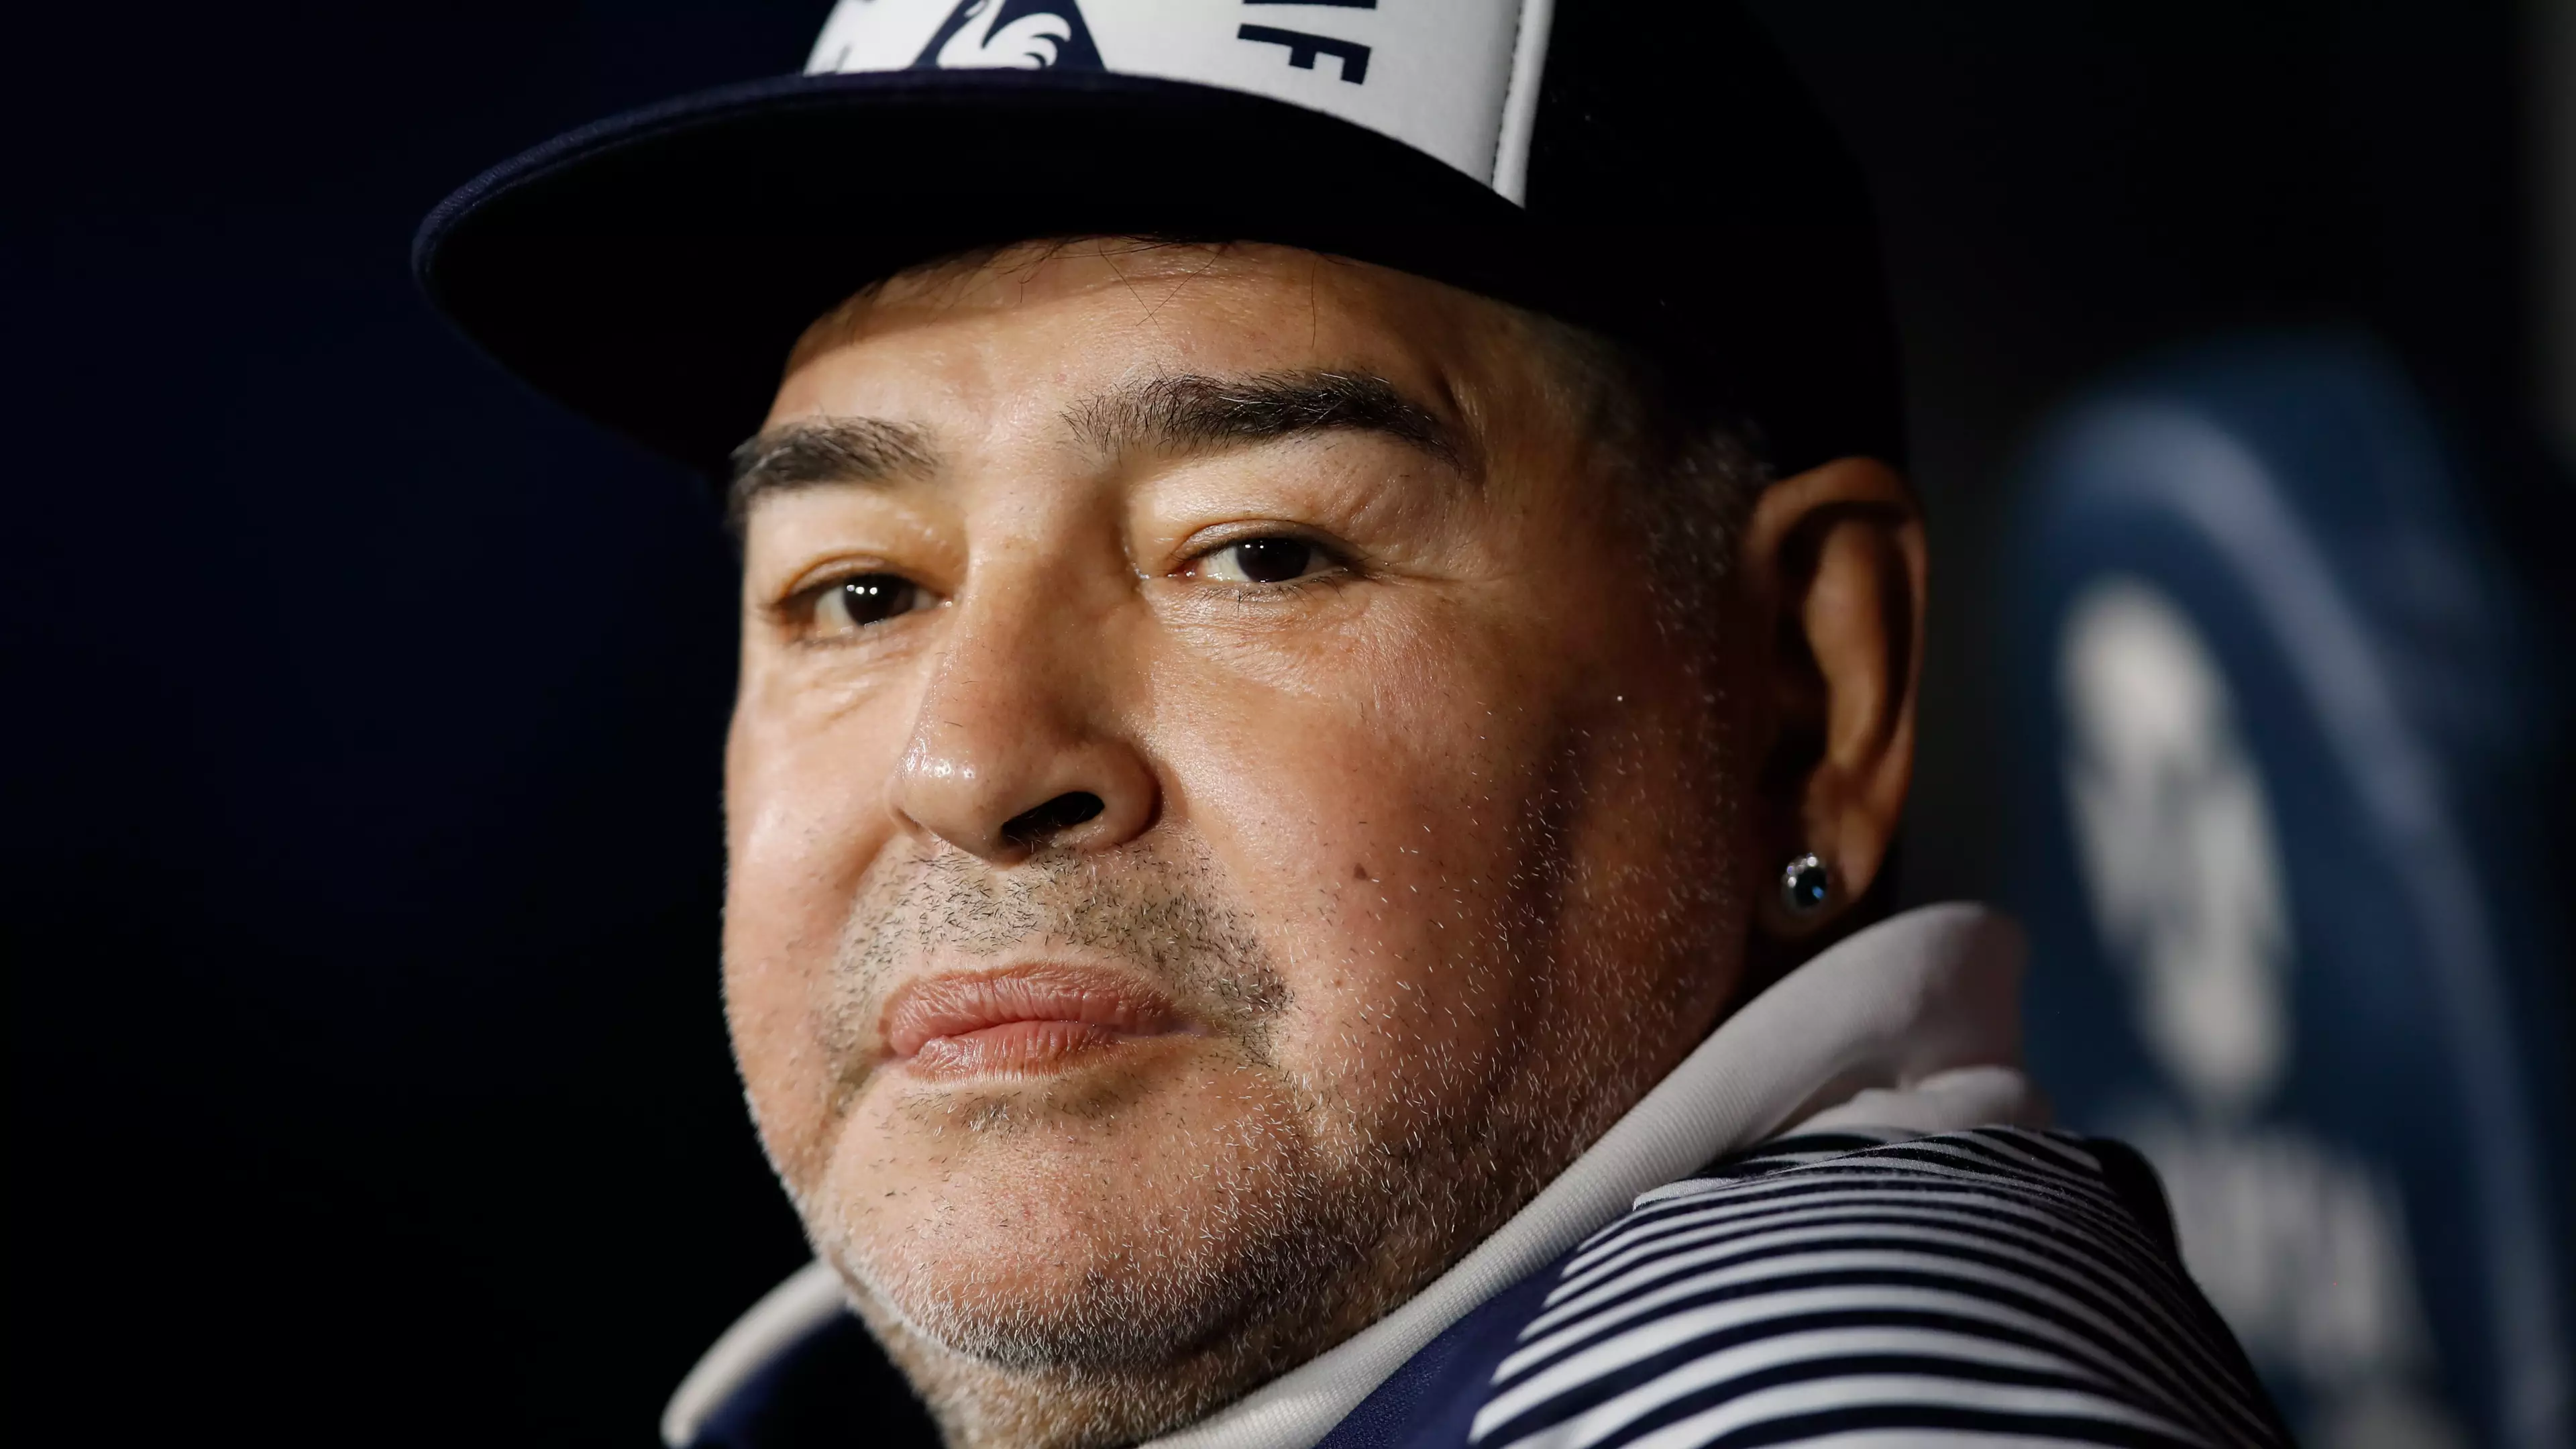 Diego Maradona Will Undergo Surgery For Blood Clot On Brain